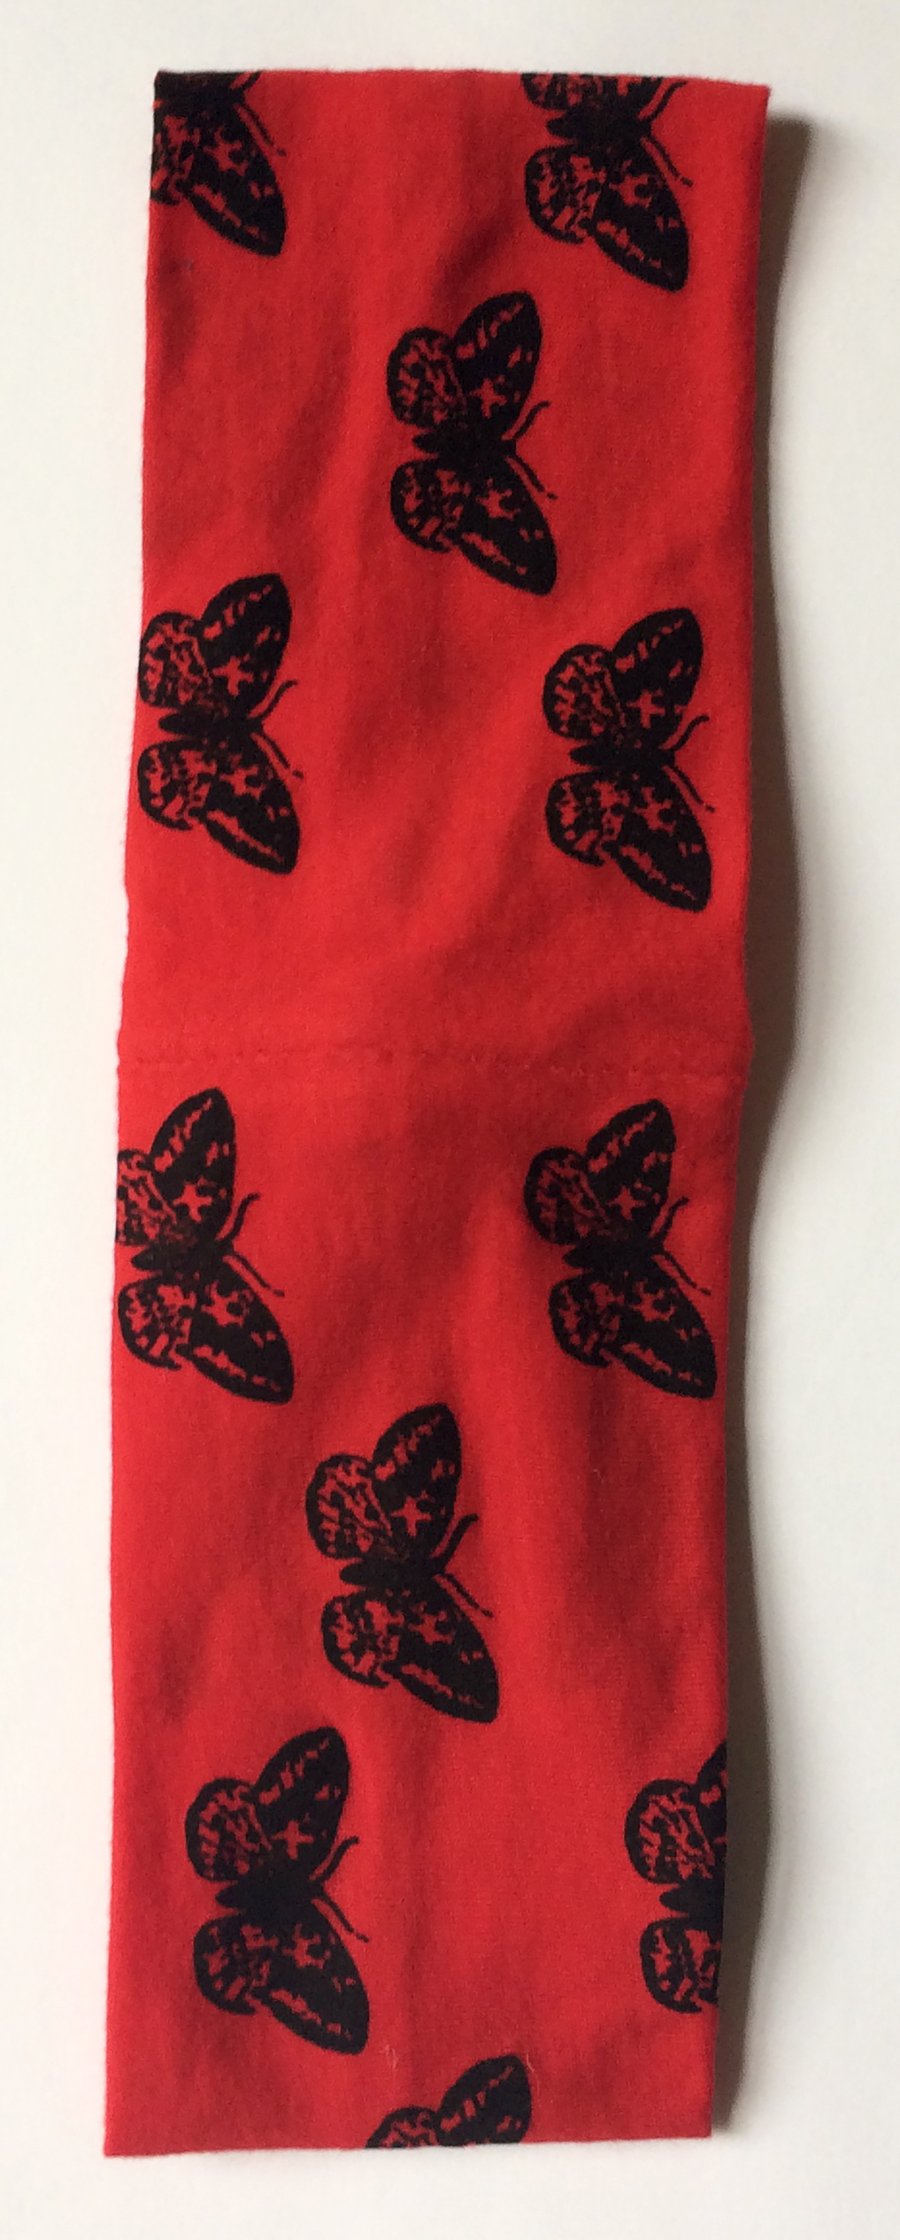 Moth  red and black headband